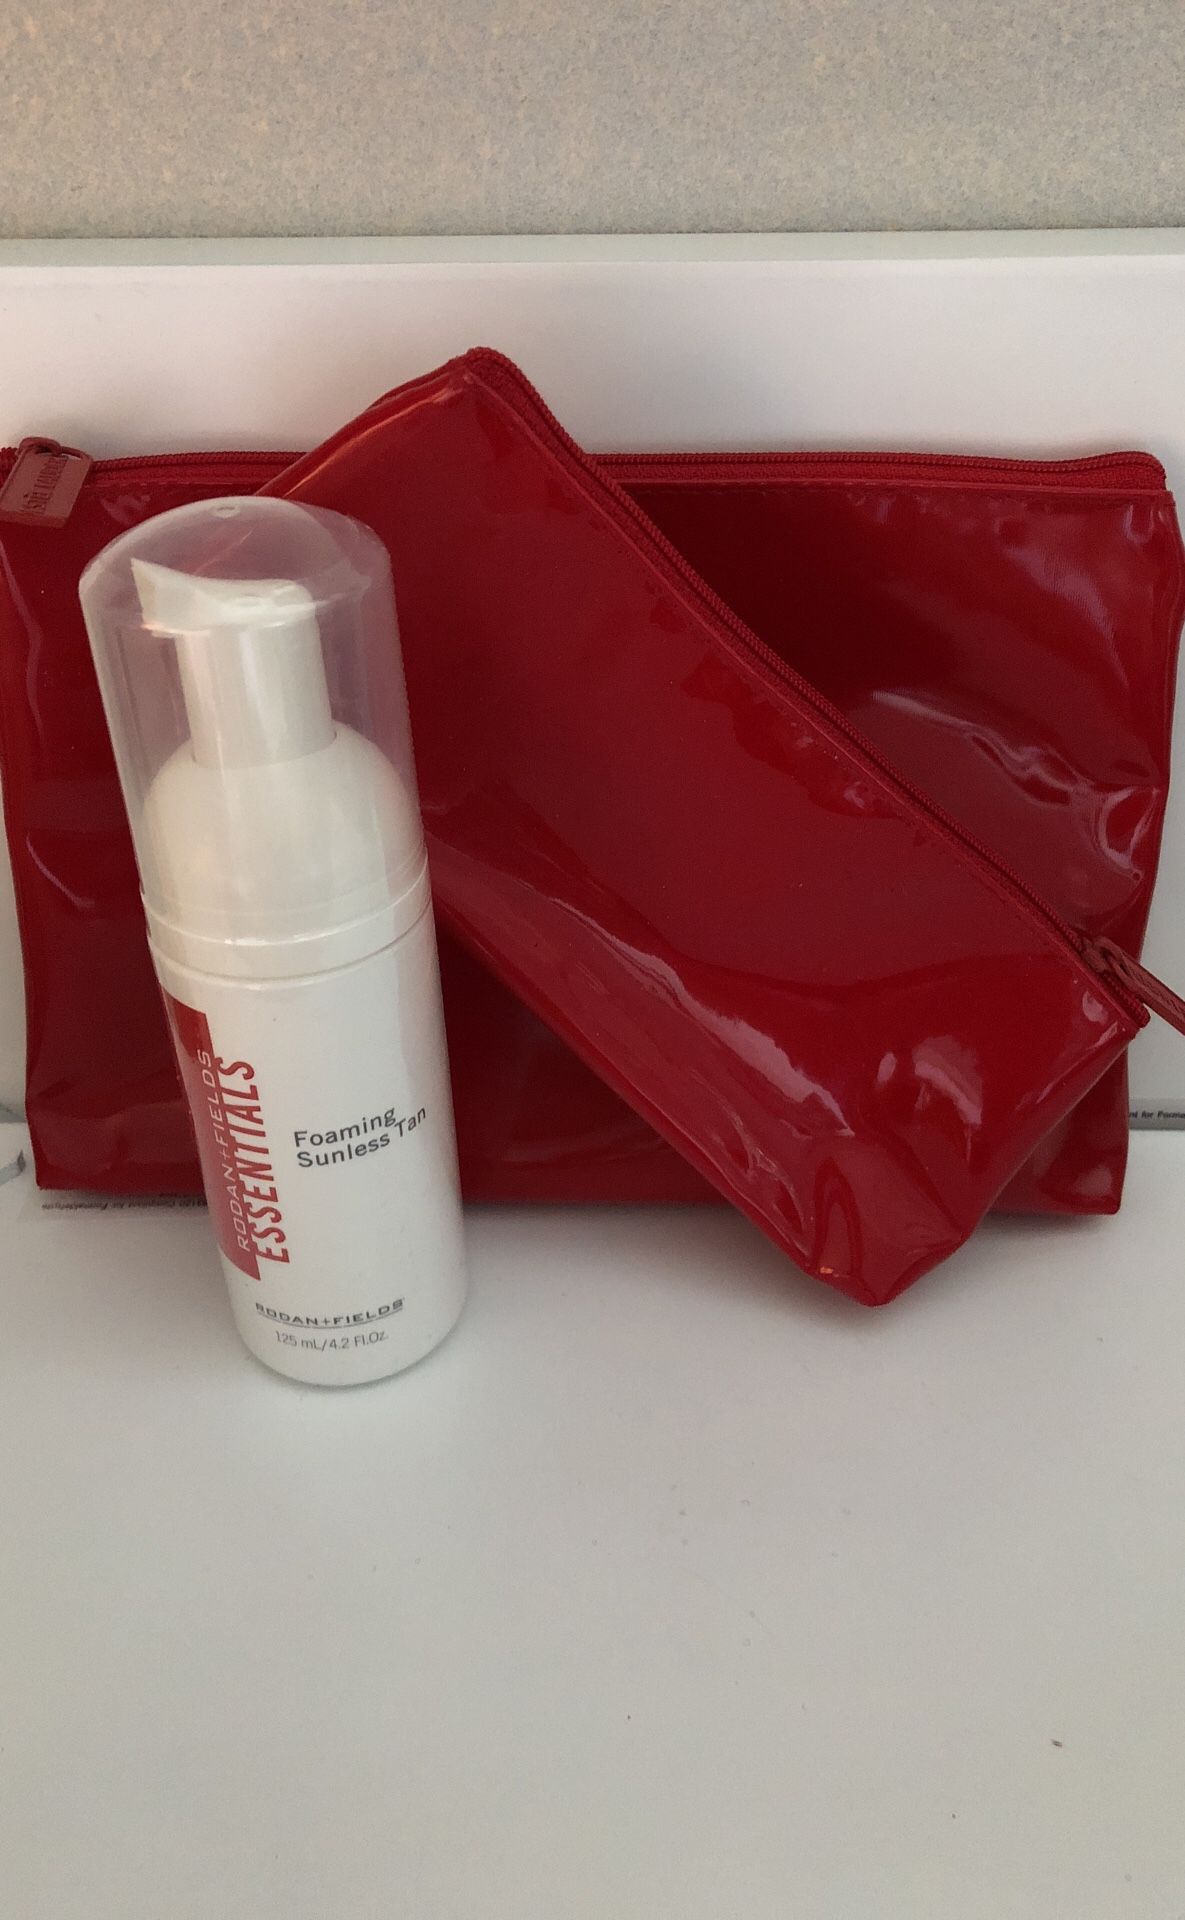 Rodan + Fields Foaming Sunless Tan; Gift-red make up bag